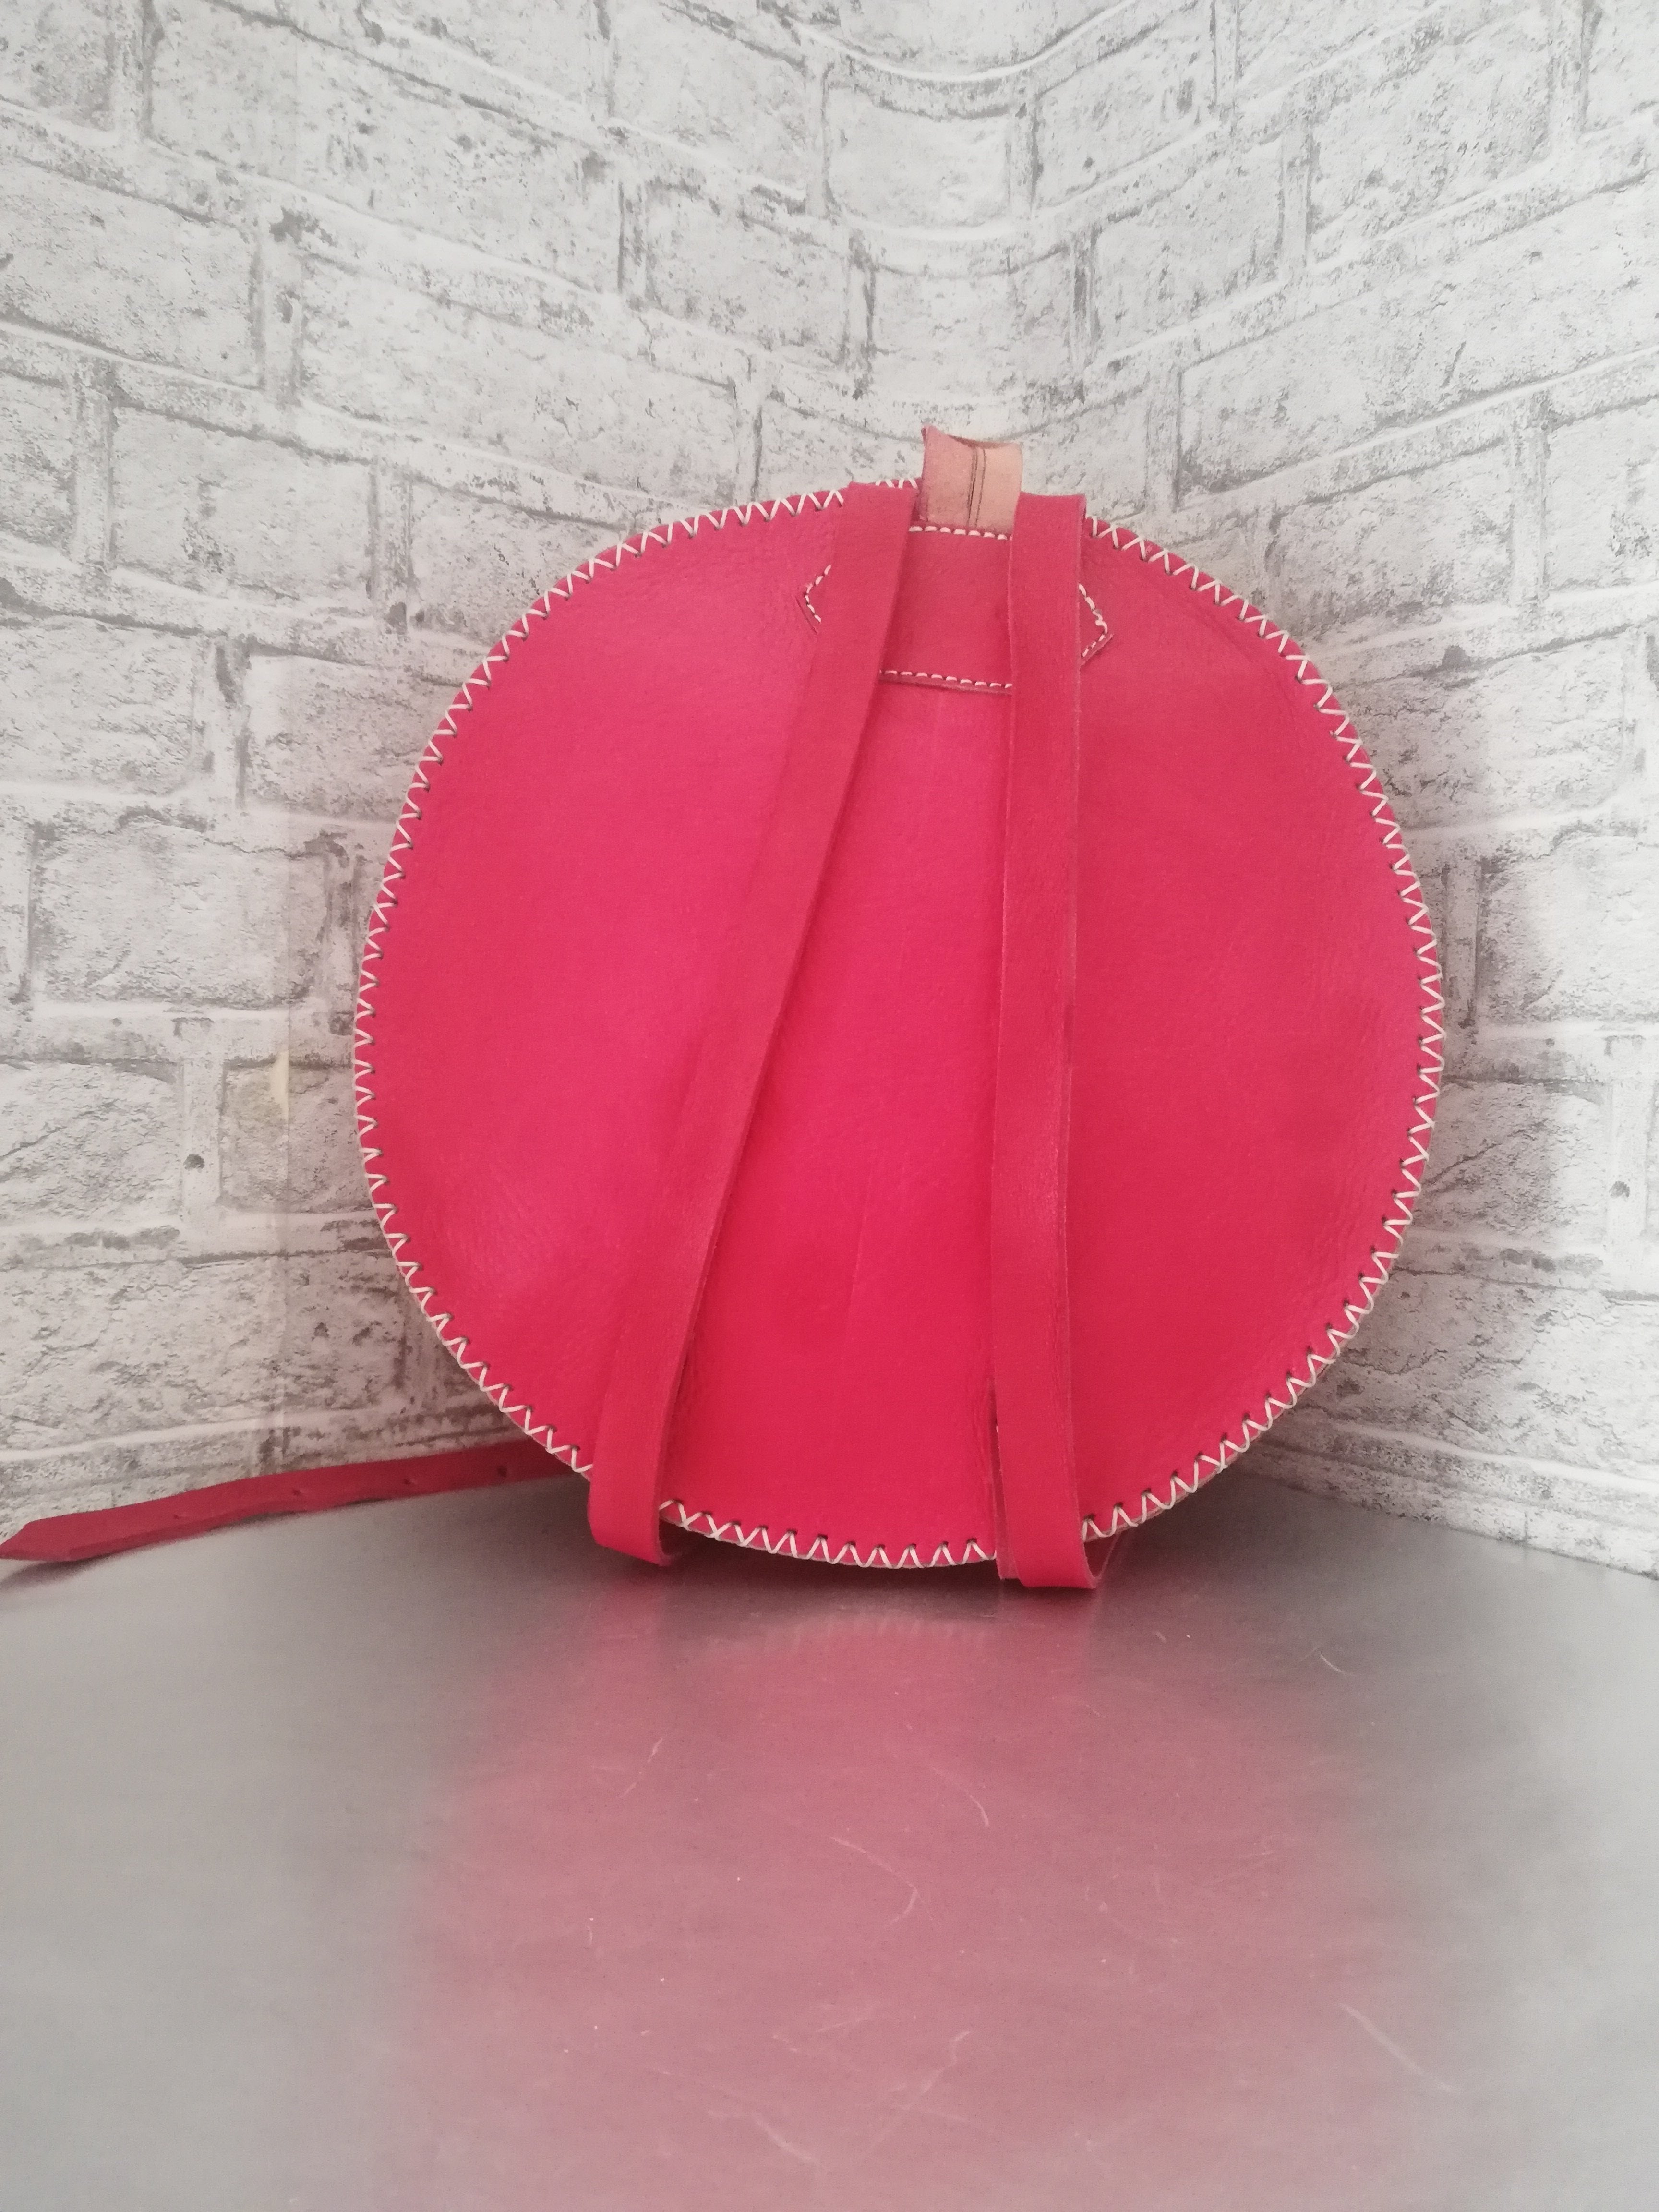 Red Backpacks Fashion Purse Women's New Leather Handbag